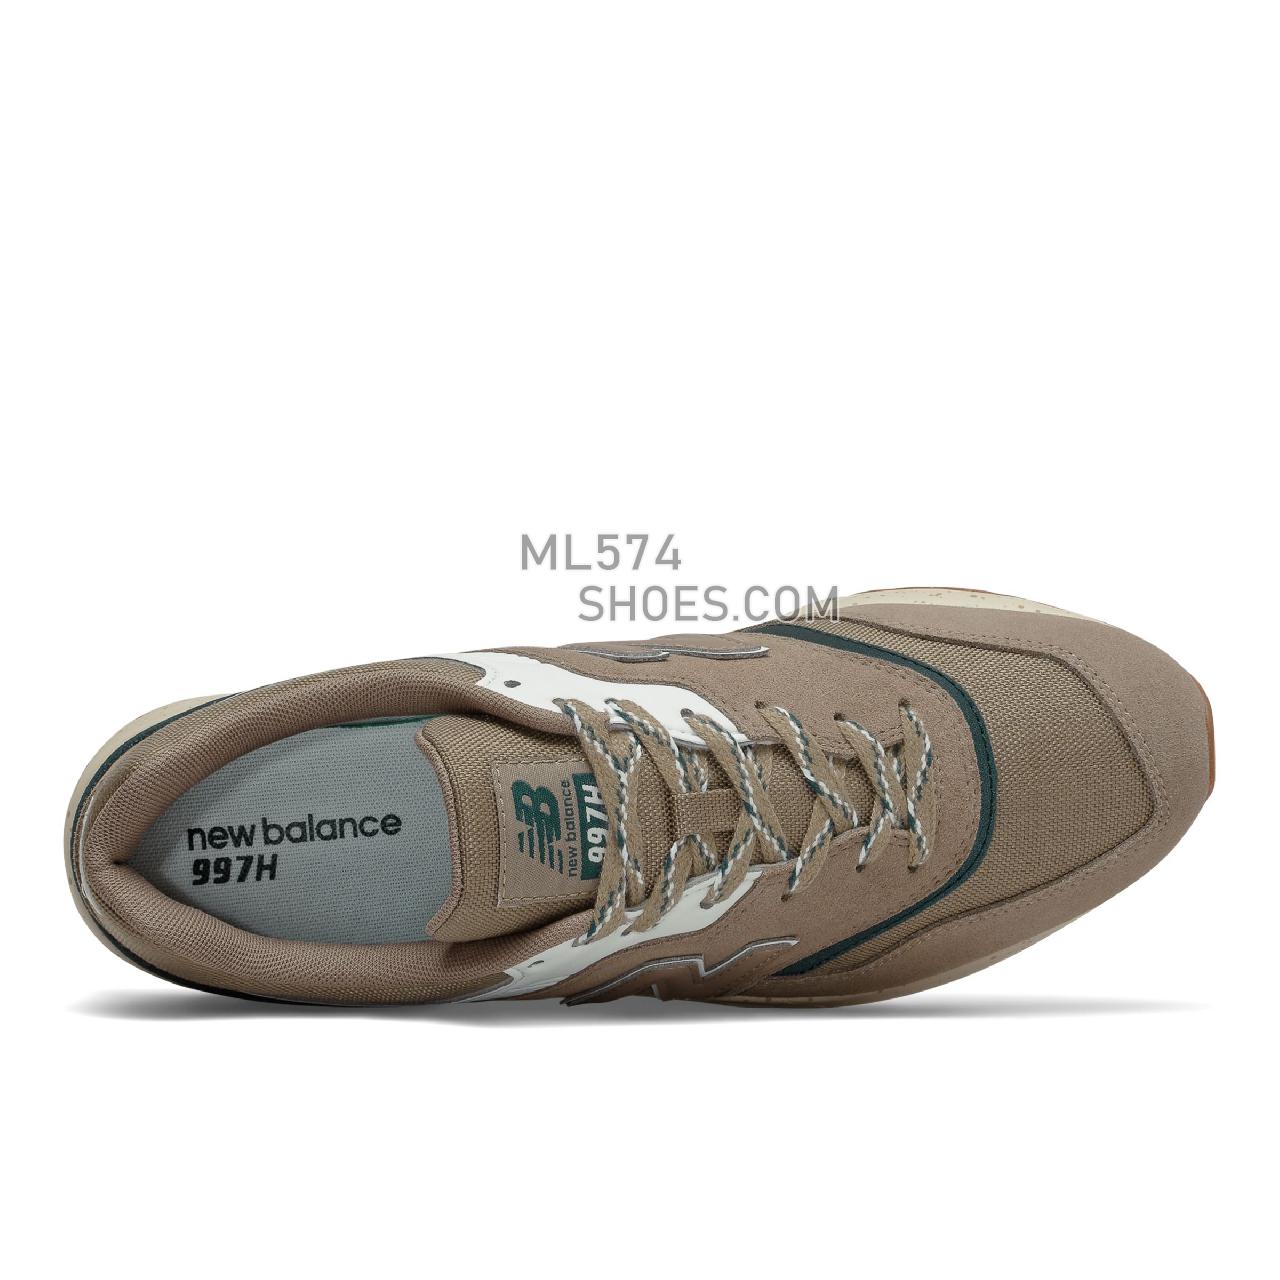 New Balance 997H - Men's Classic Sneakers - Mushroom with Trek - CM997HJJ